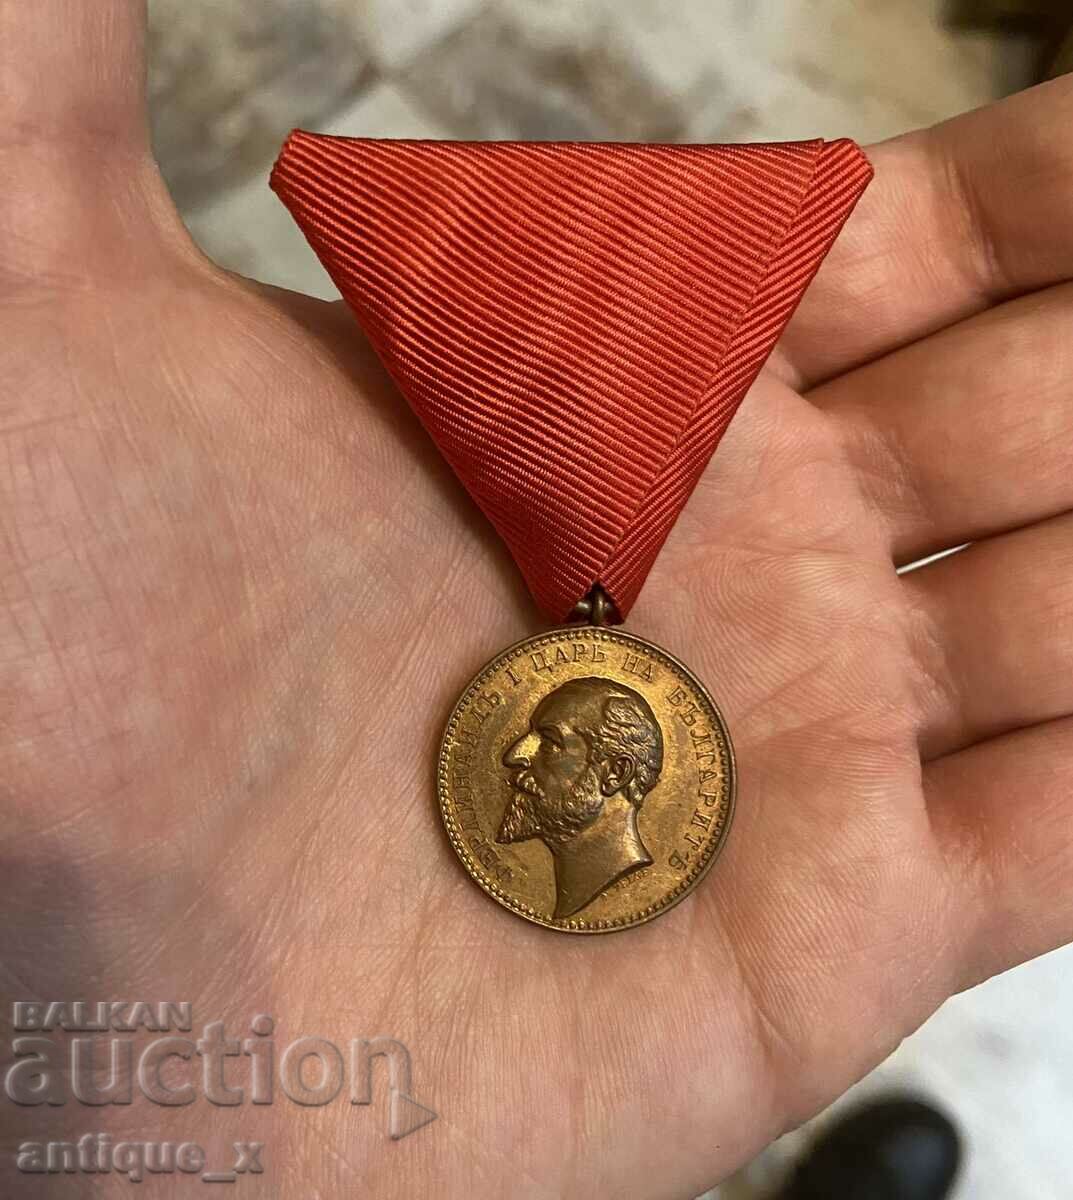 Царски медал “За заслуга” - Фердинанд I - P. Telge - ЩЕМПЕЛ!